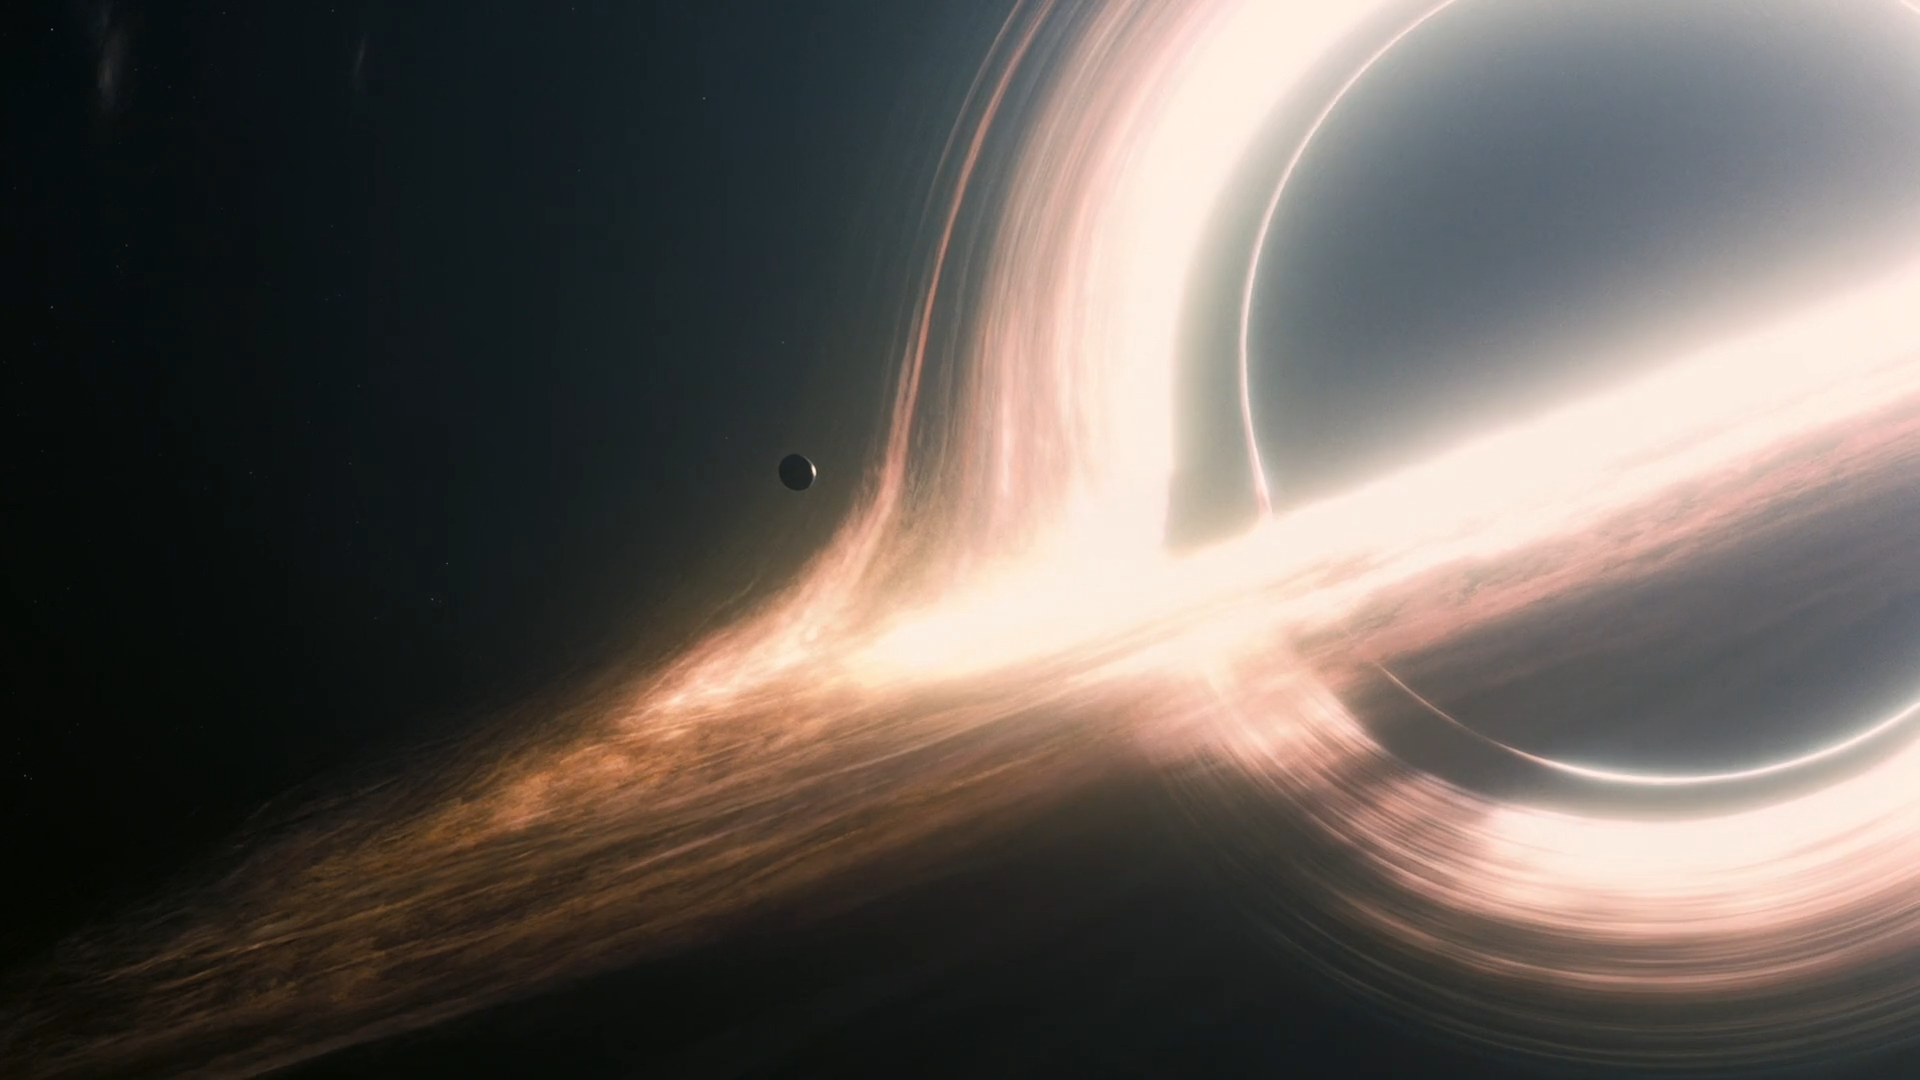 Interstellar' Visual Effects Team Publishes Black Hole Study